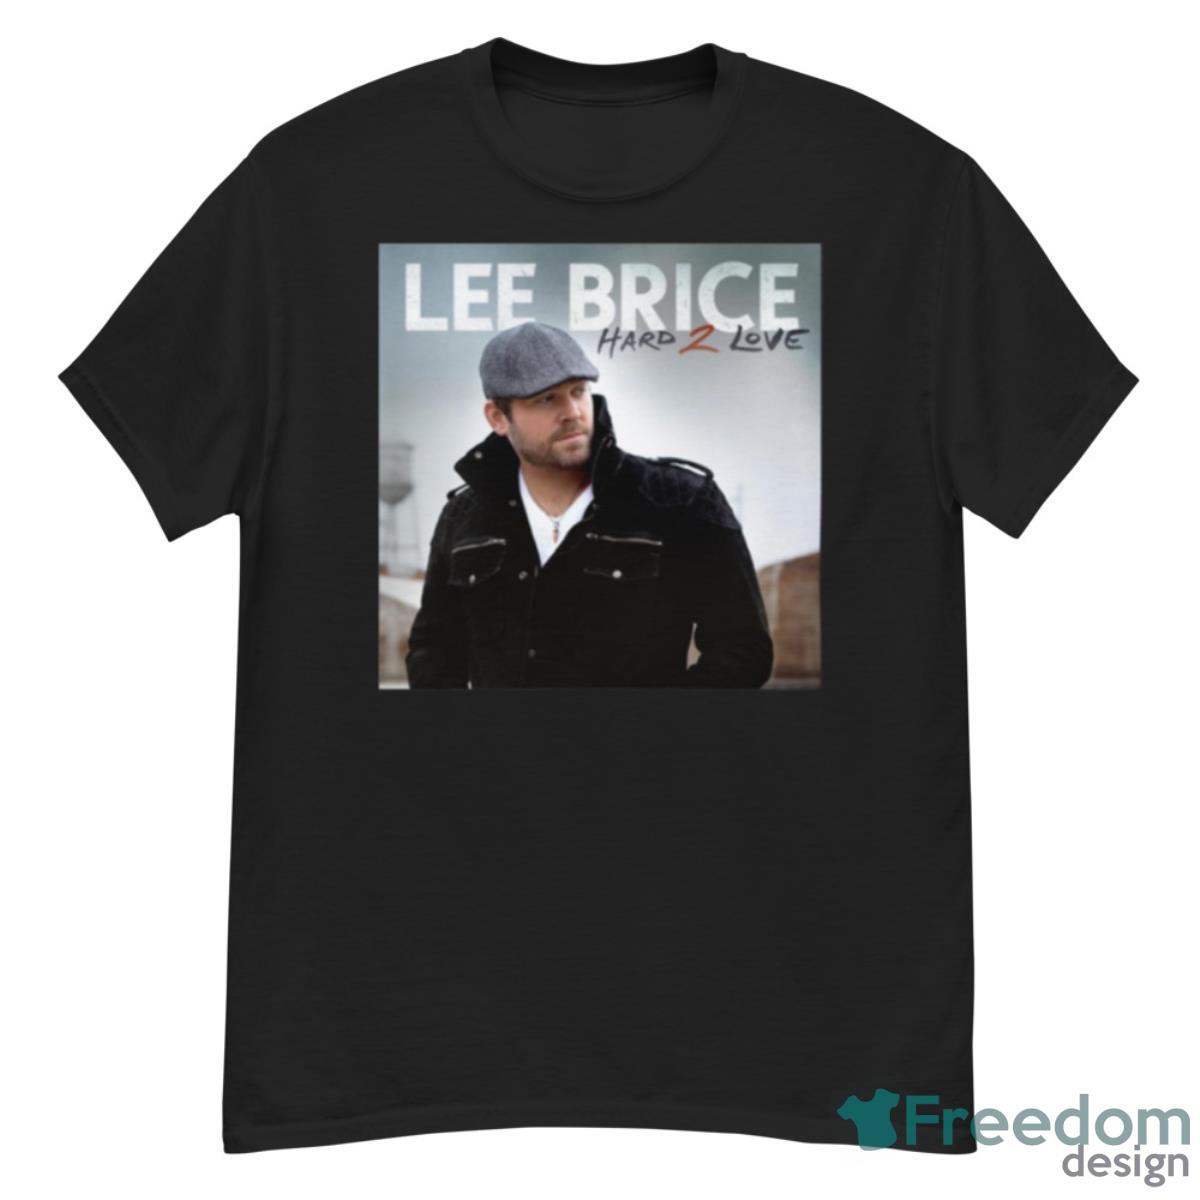 Lee Brice Hard 2 Love Shirt - G500 Men’s Classic T-Shirt